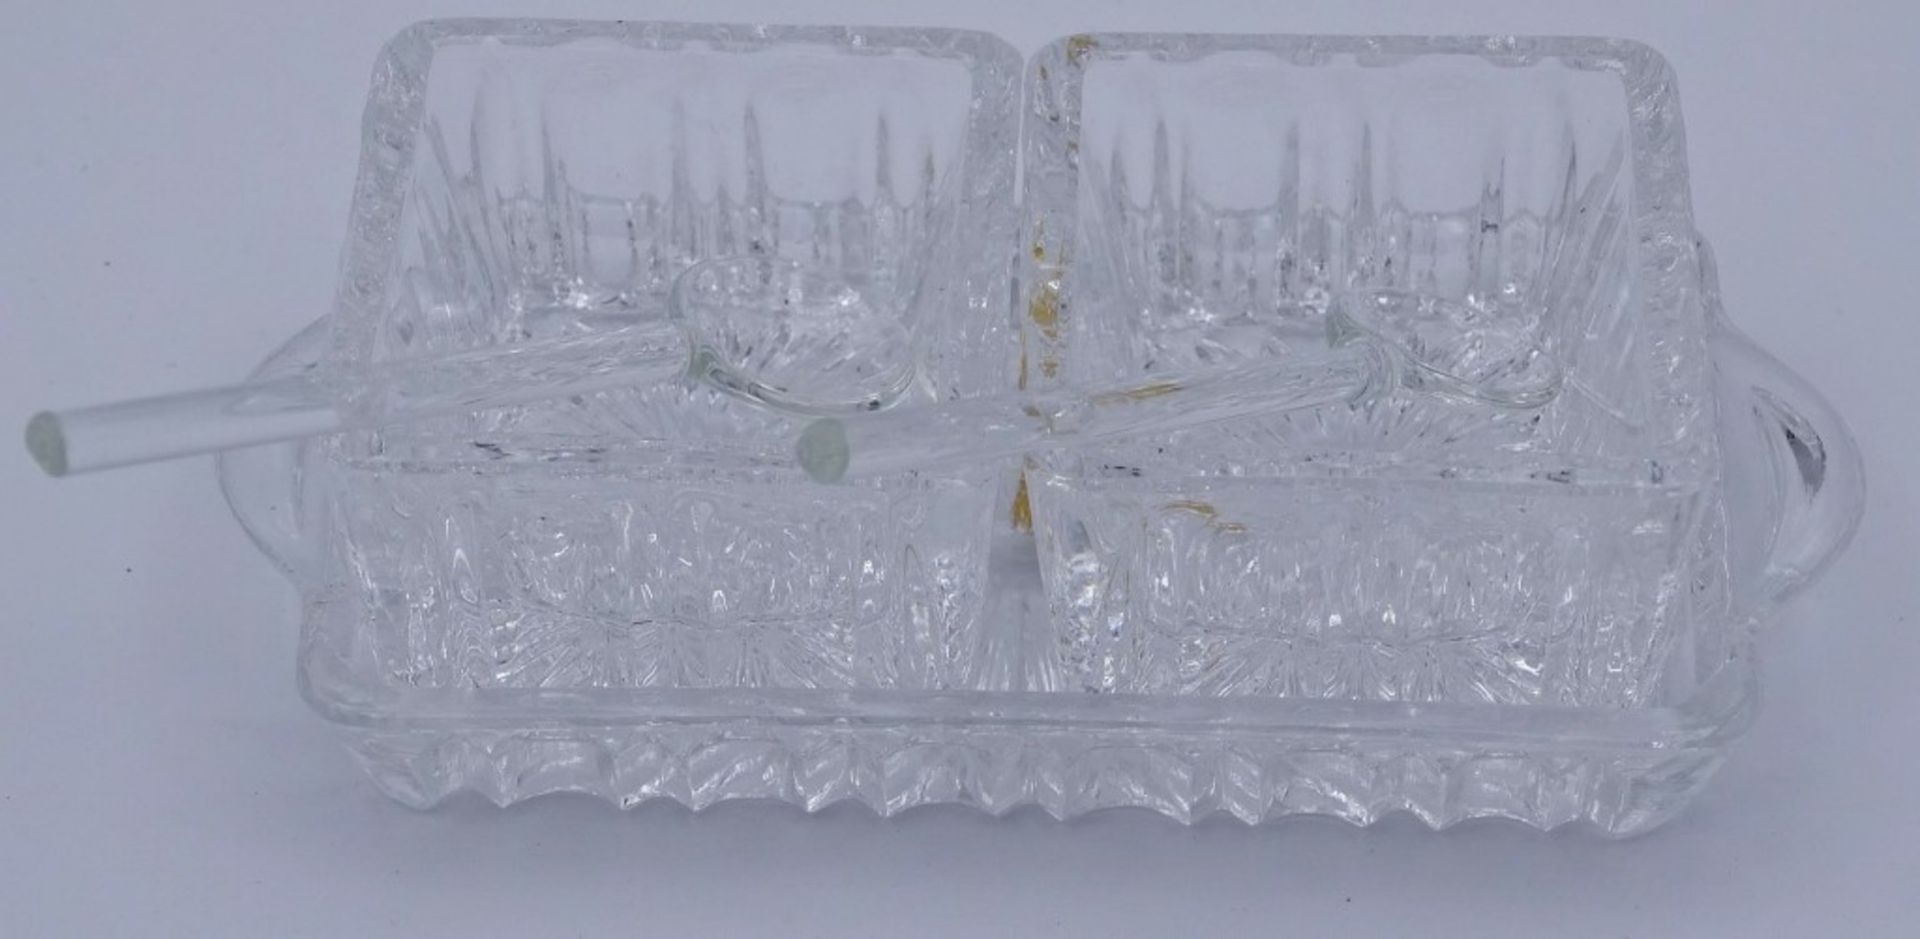 kl. Kristall Tablett mit Salznäpfen und Löffel - Image 2 of 3